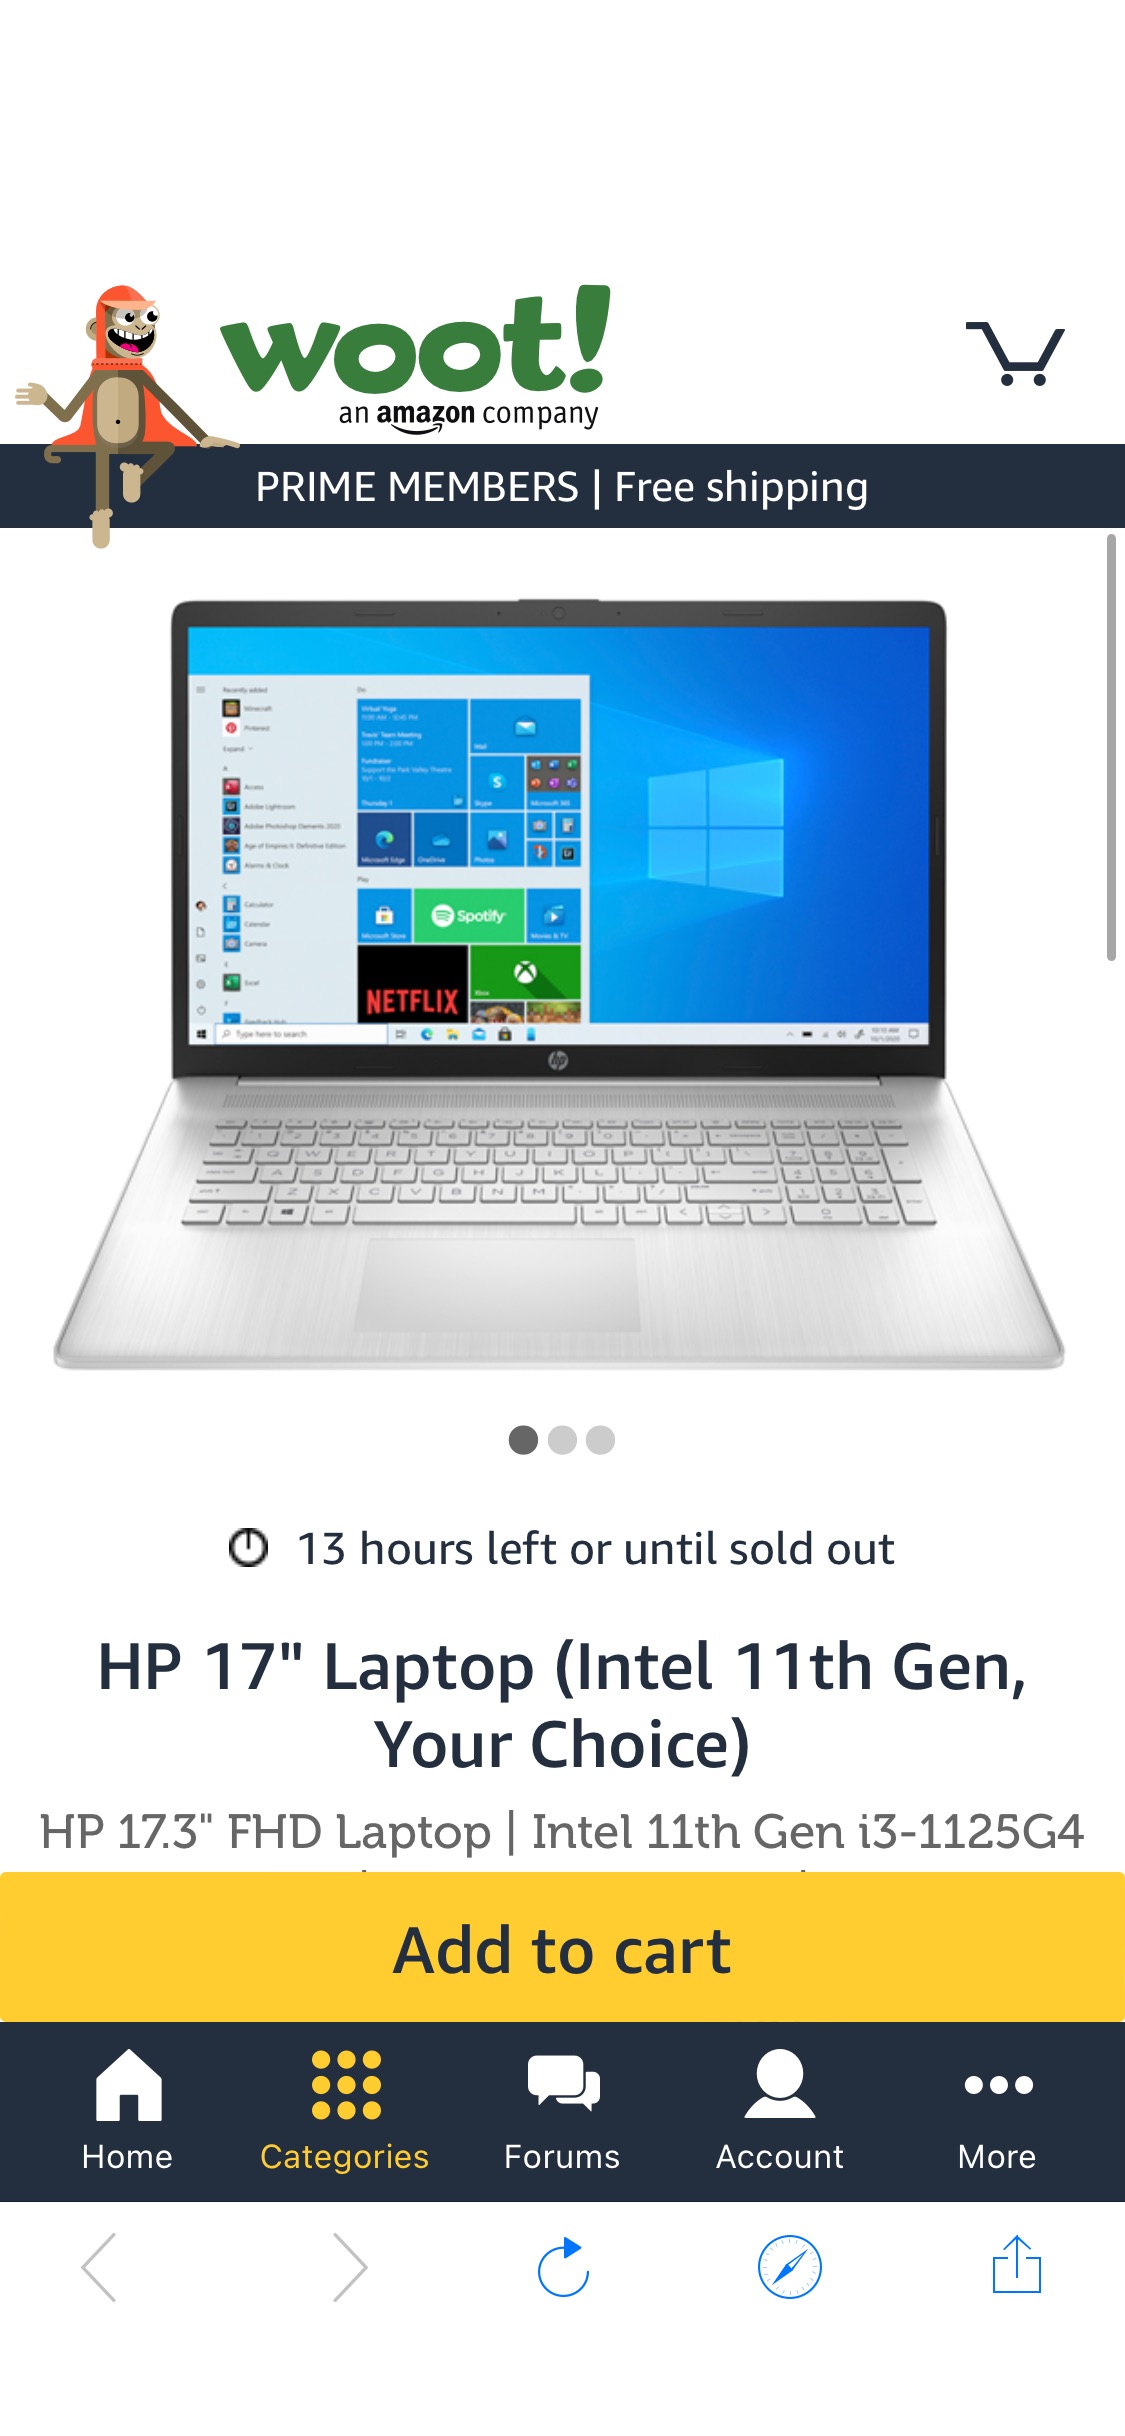 惠普HP 17" 笔记本电脑，(Intel 11th Gen, Your Choice)